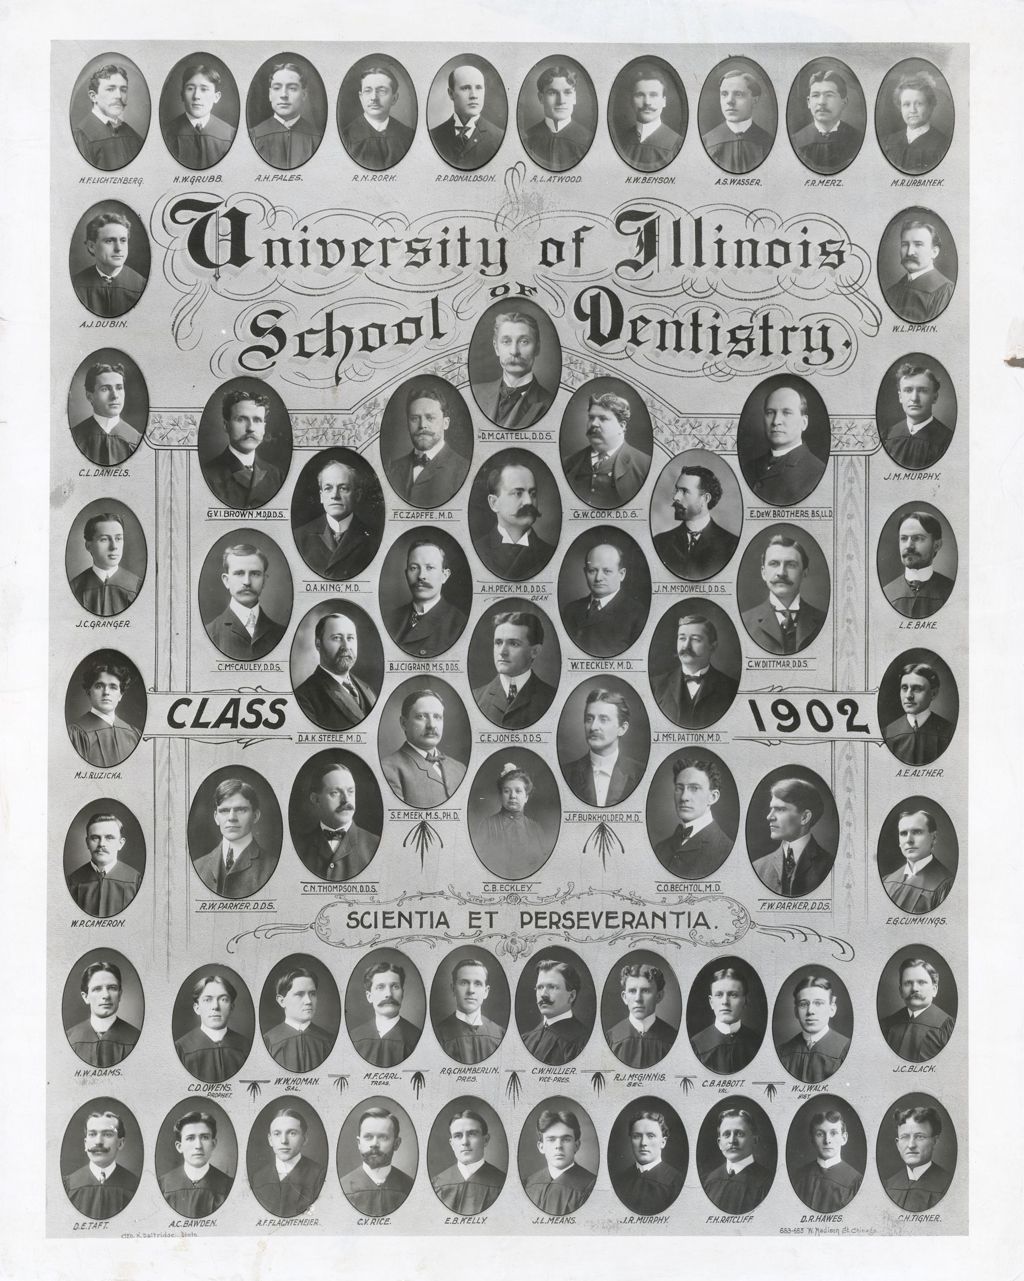 1902 graduating class, University of Illinois College of Dentistry